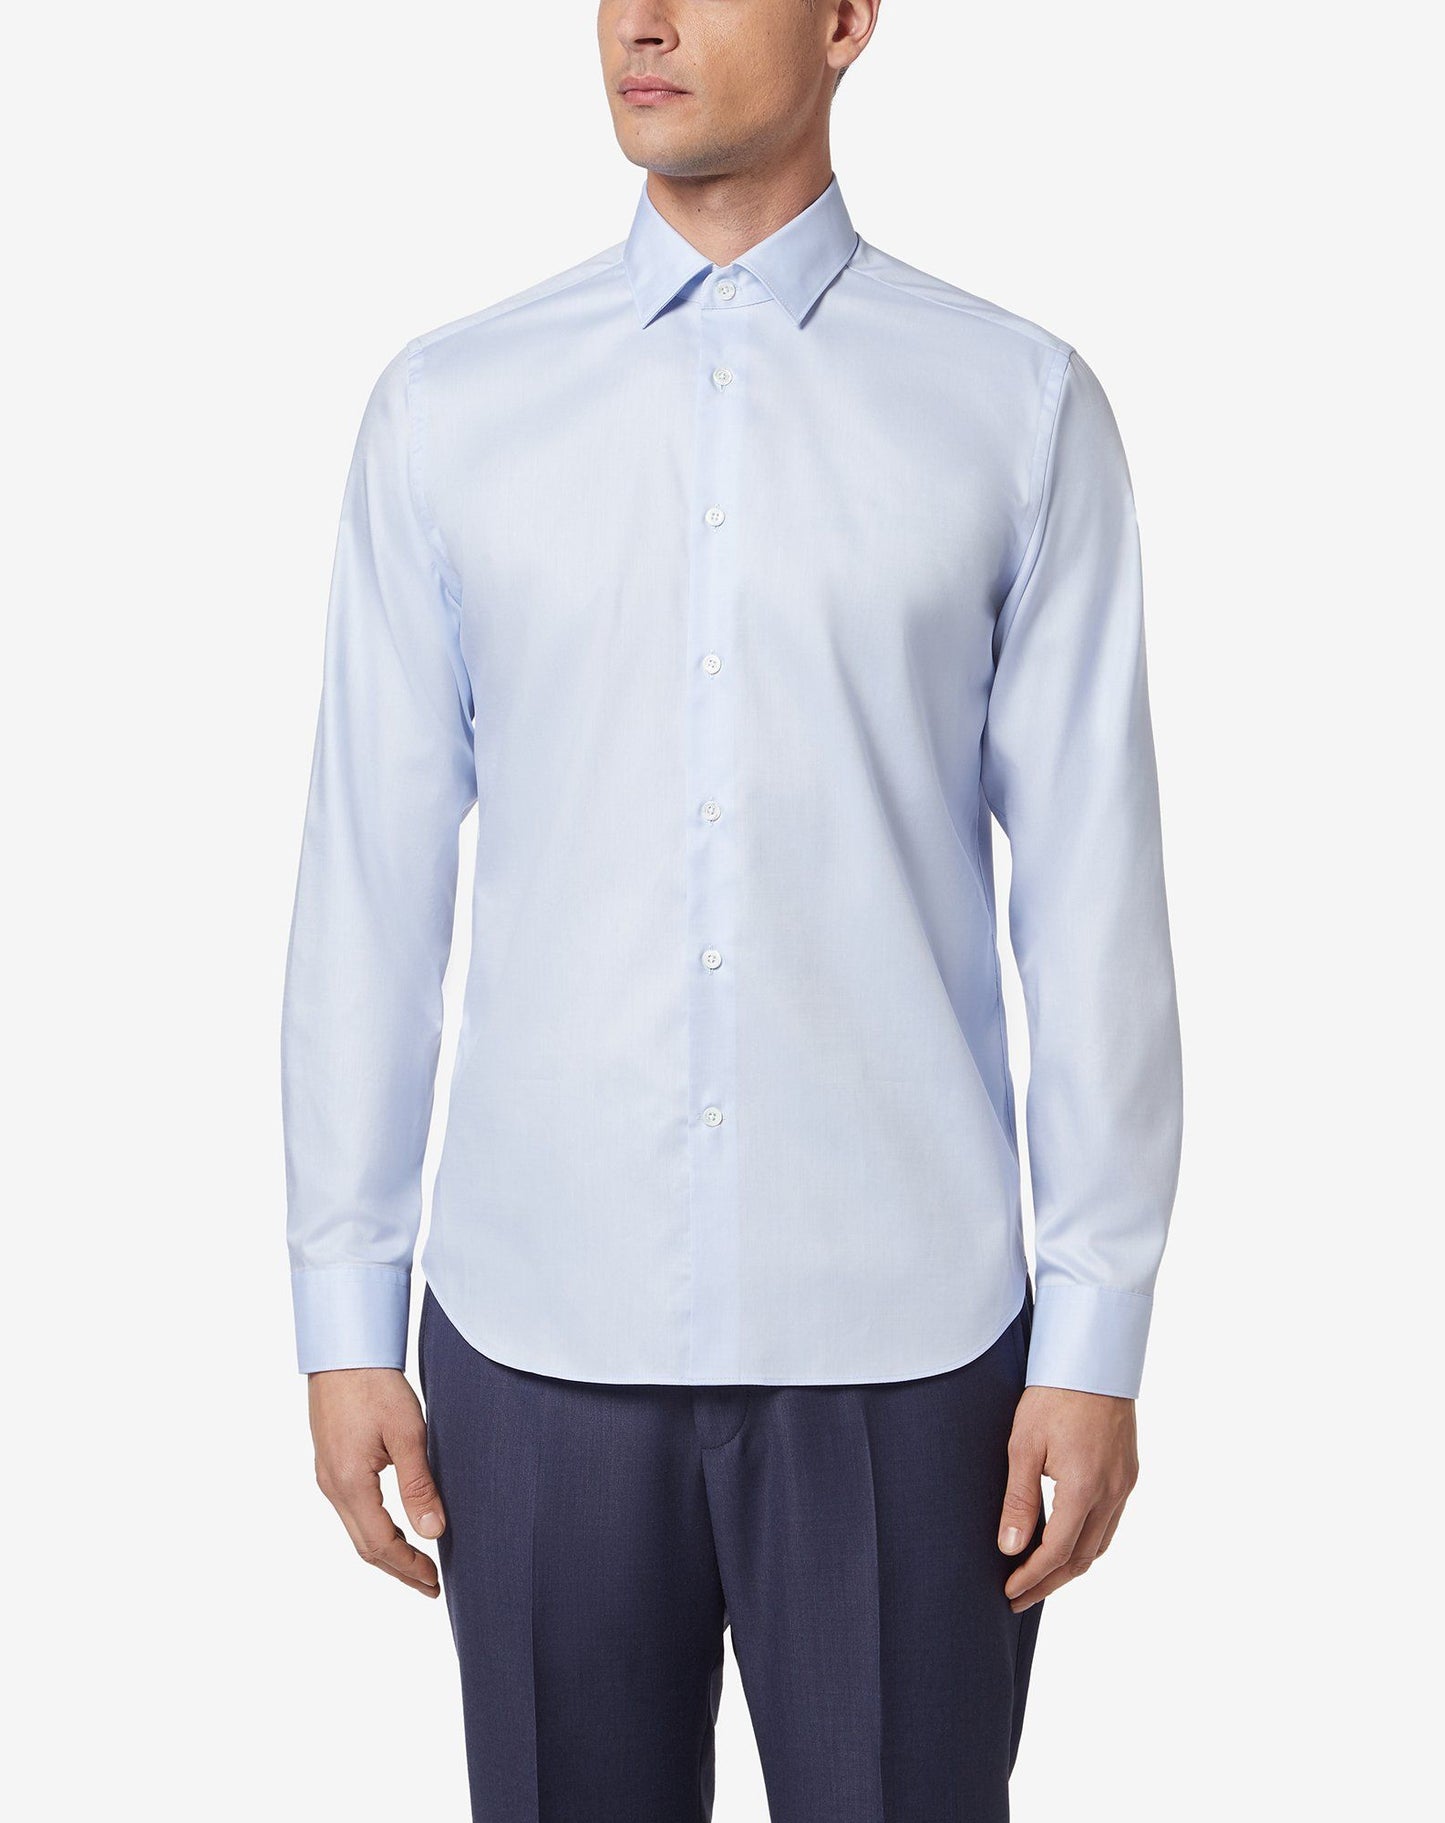 Idris Sky Blue Shirt